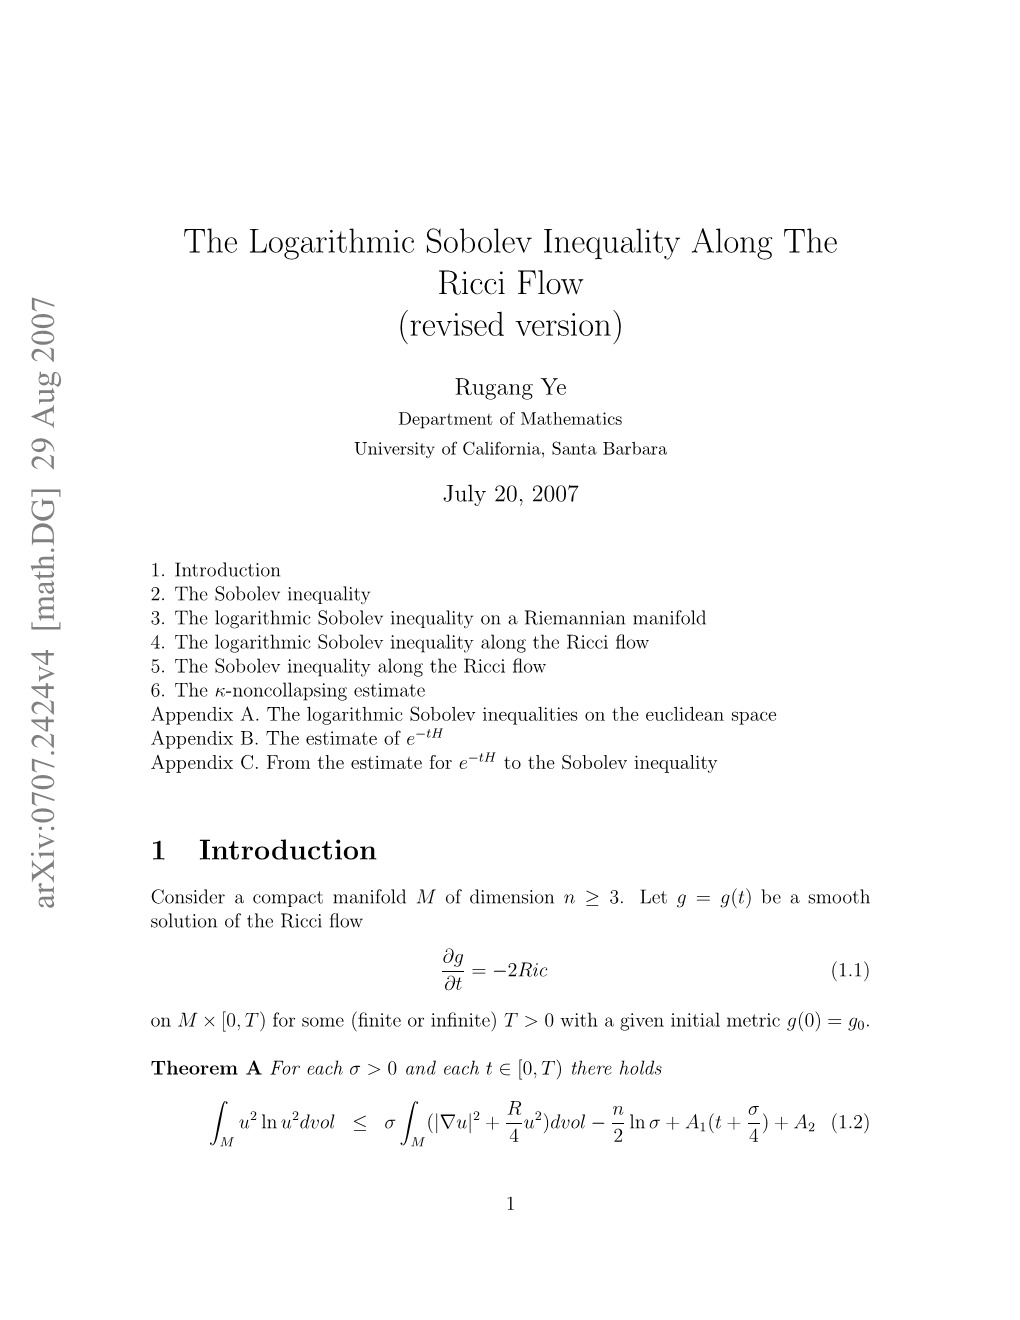 The Logarithmic Sobolev Inequality Along the Ricci Flow